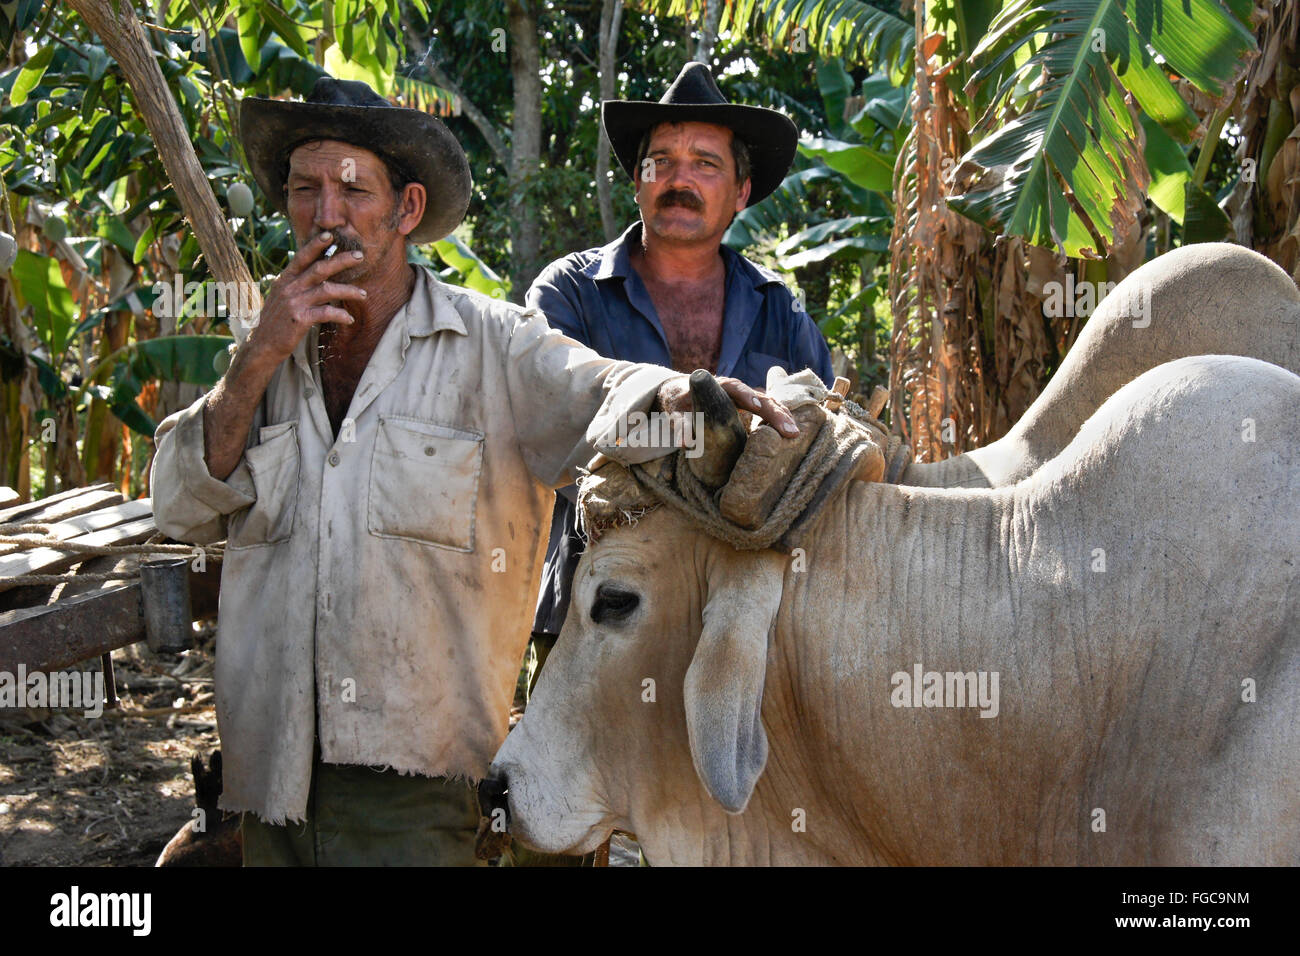 Bauern mit Ochsen, Valle de Los Ingenios (Tal der Zuckerfabriken), Trinidad, Kuba Stockfoto